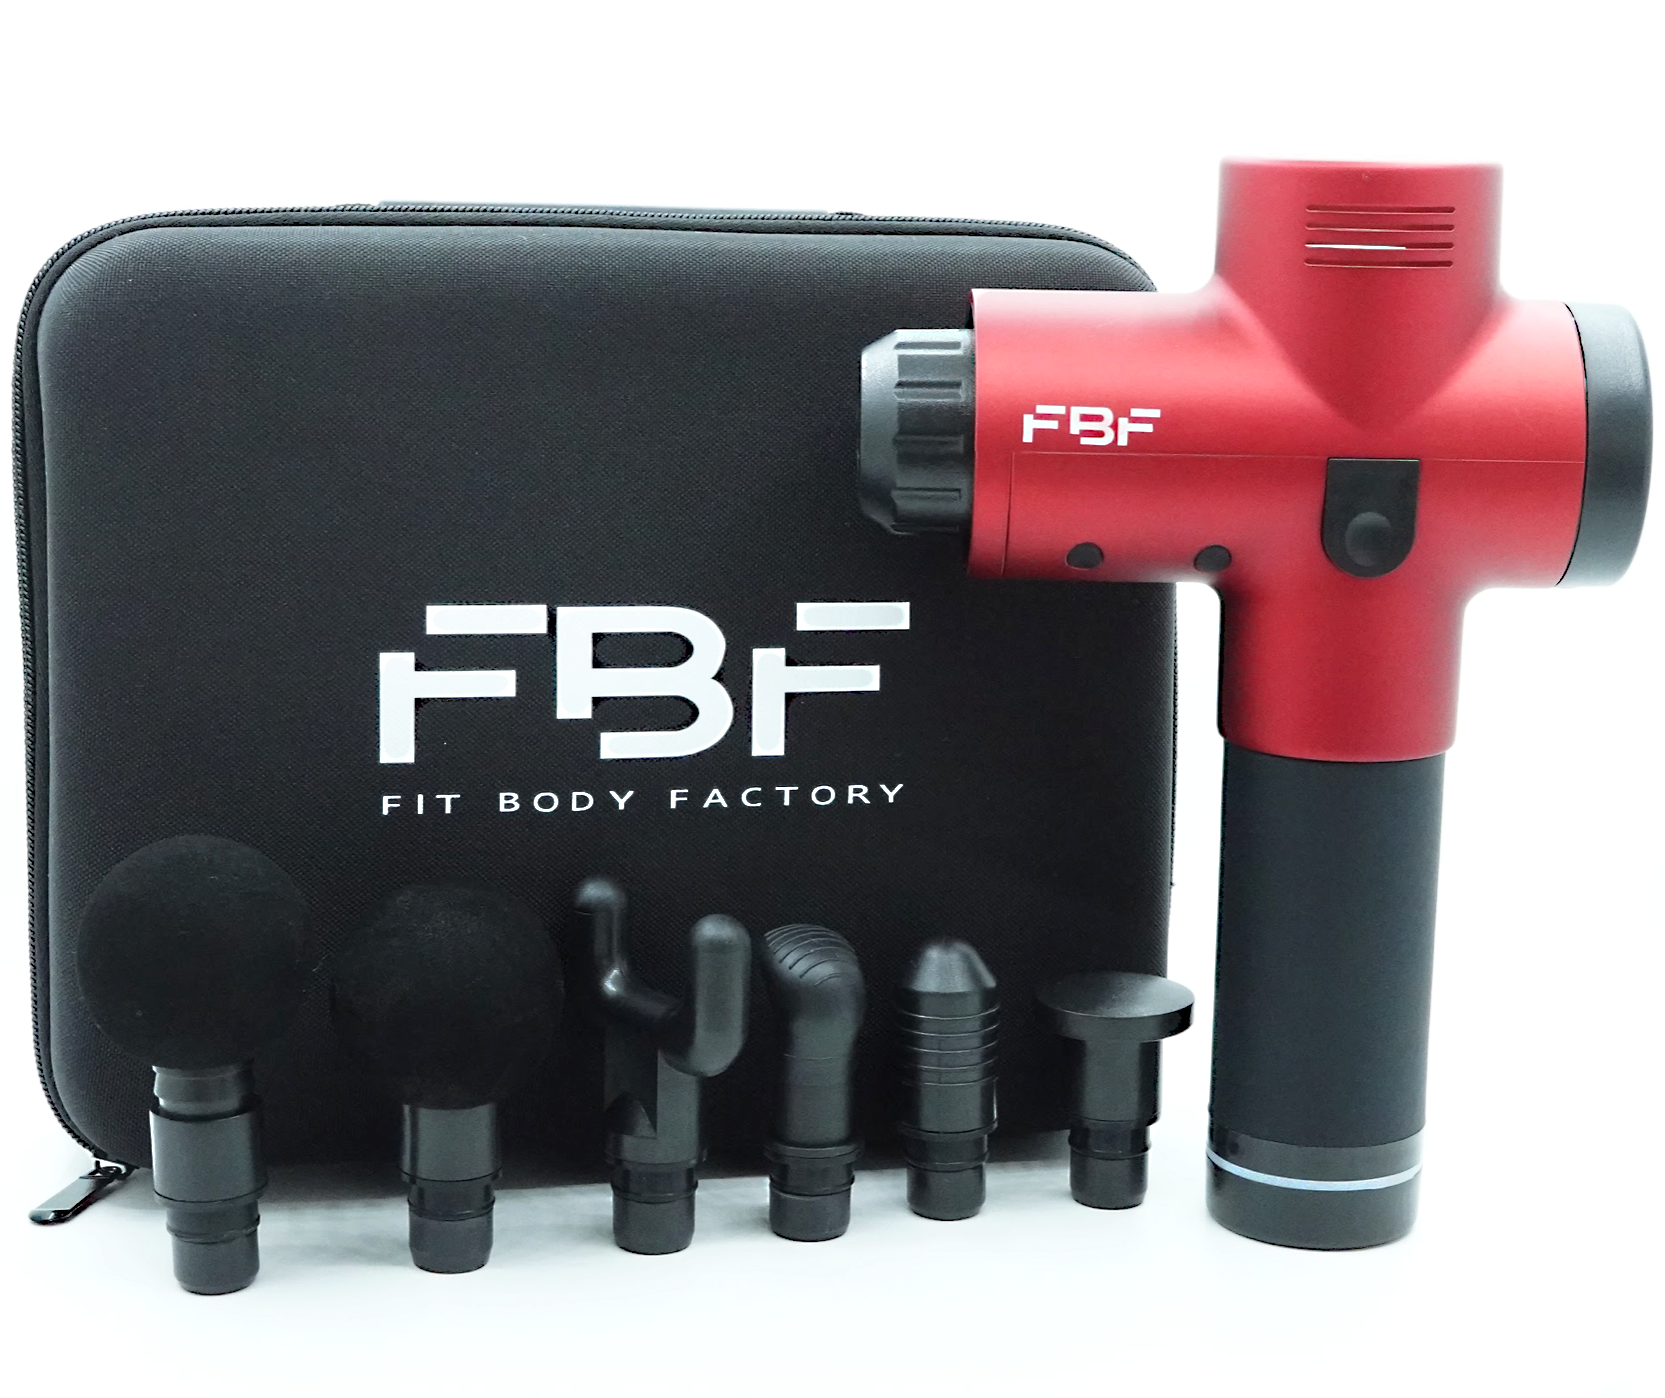 FBF Pulse Massage Gun™ - Fit Body Factory - Percussion Therapy Fitness Massage Gun